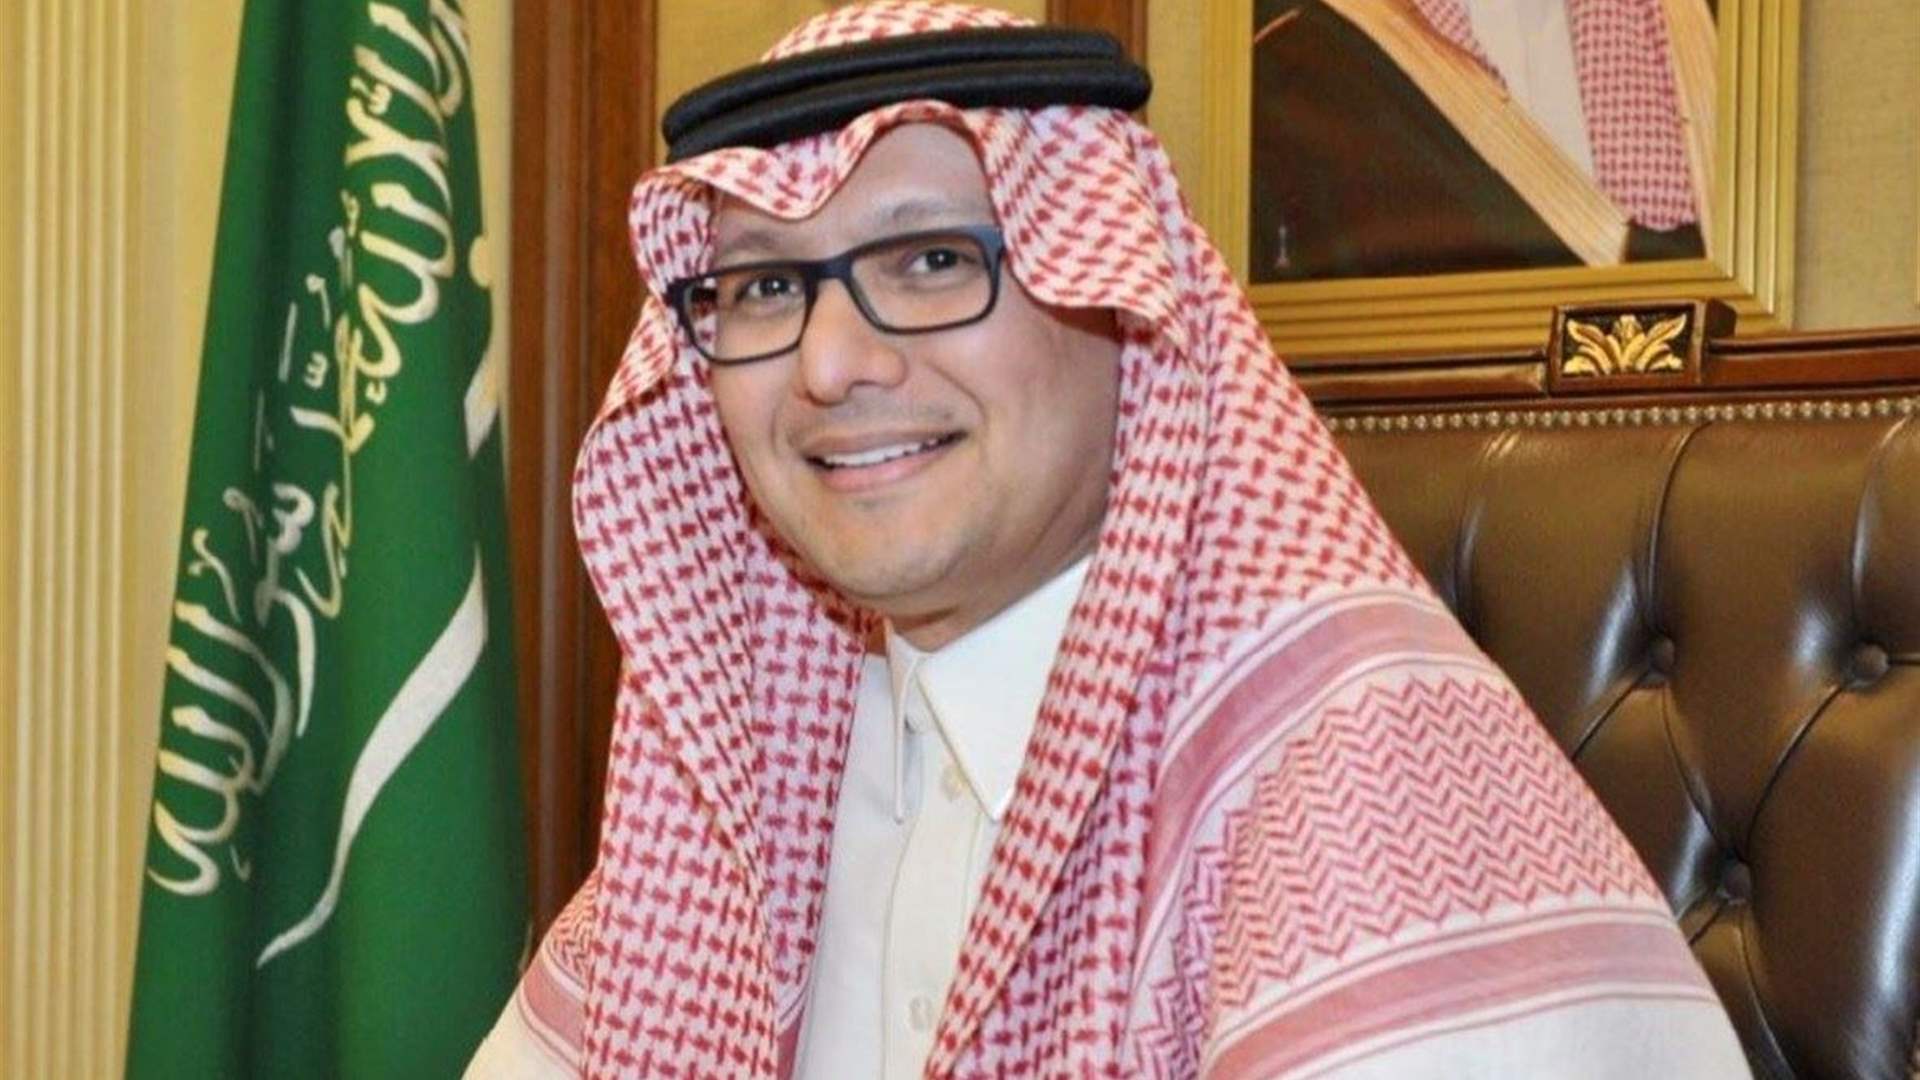 Saudi Ambassador to Lebanon: Saudi Arabia remains steadfast in its support for Lebanon